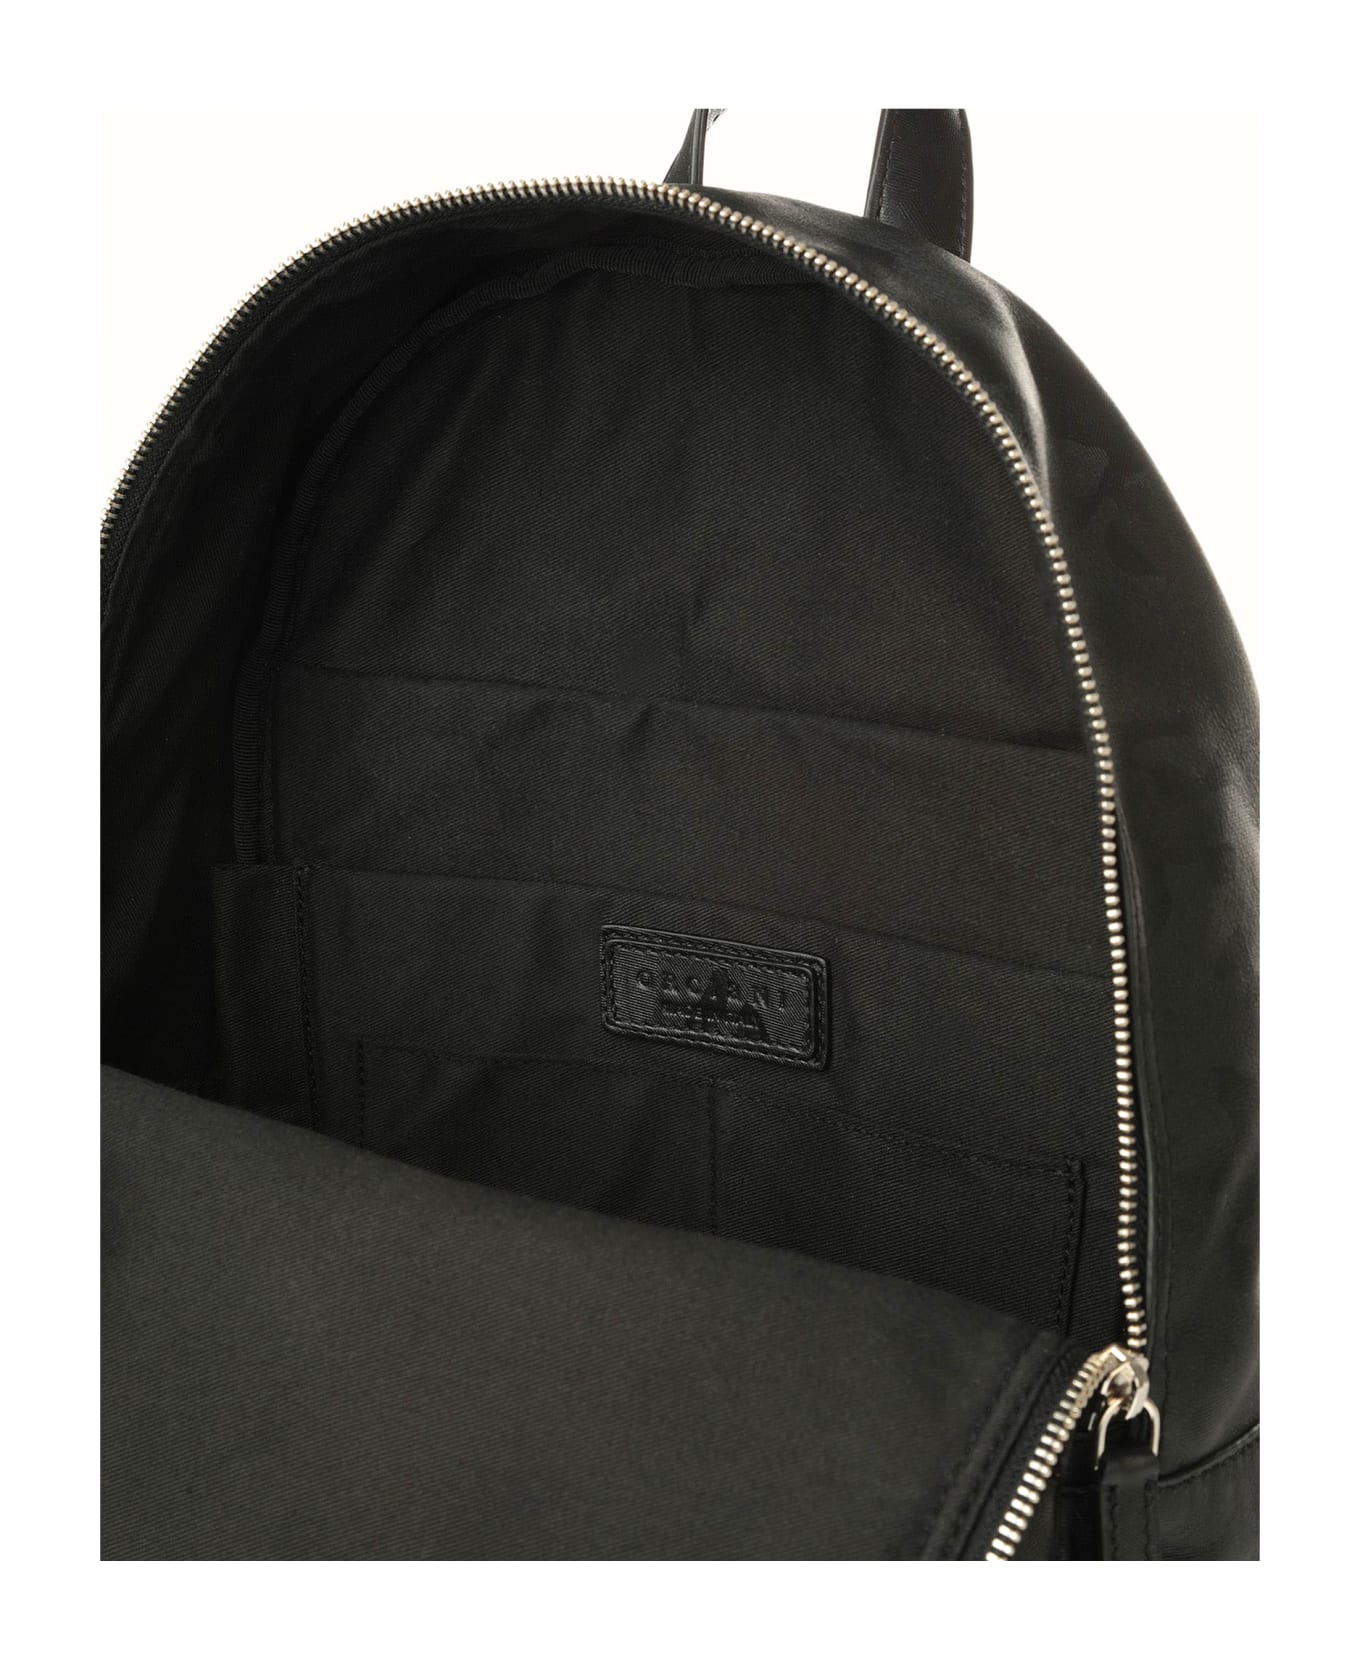 Orciani Skyline Black Leather Backpack - Black